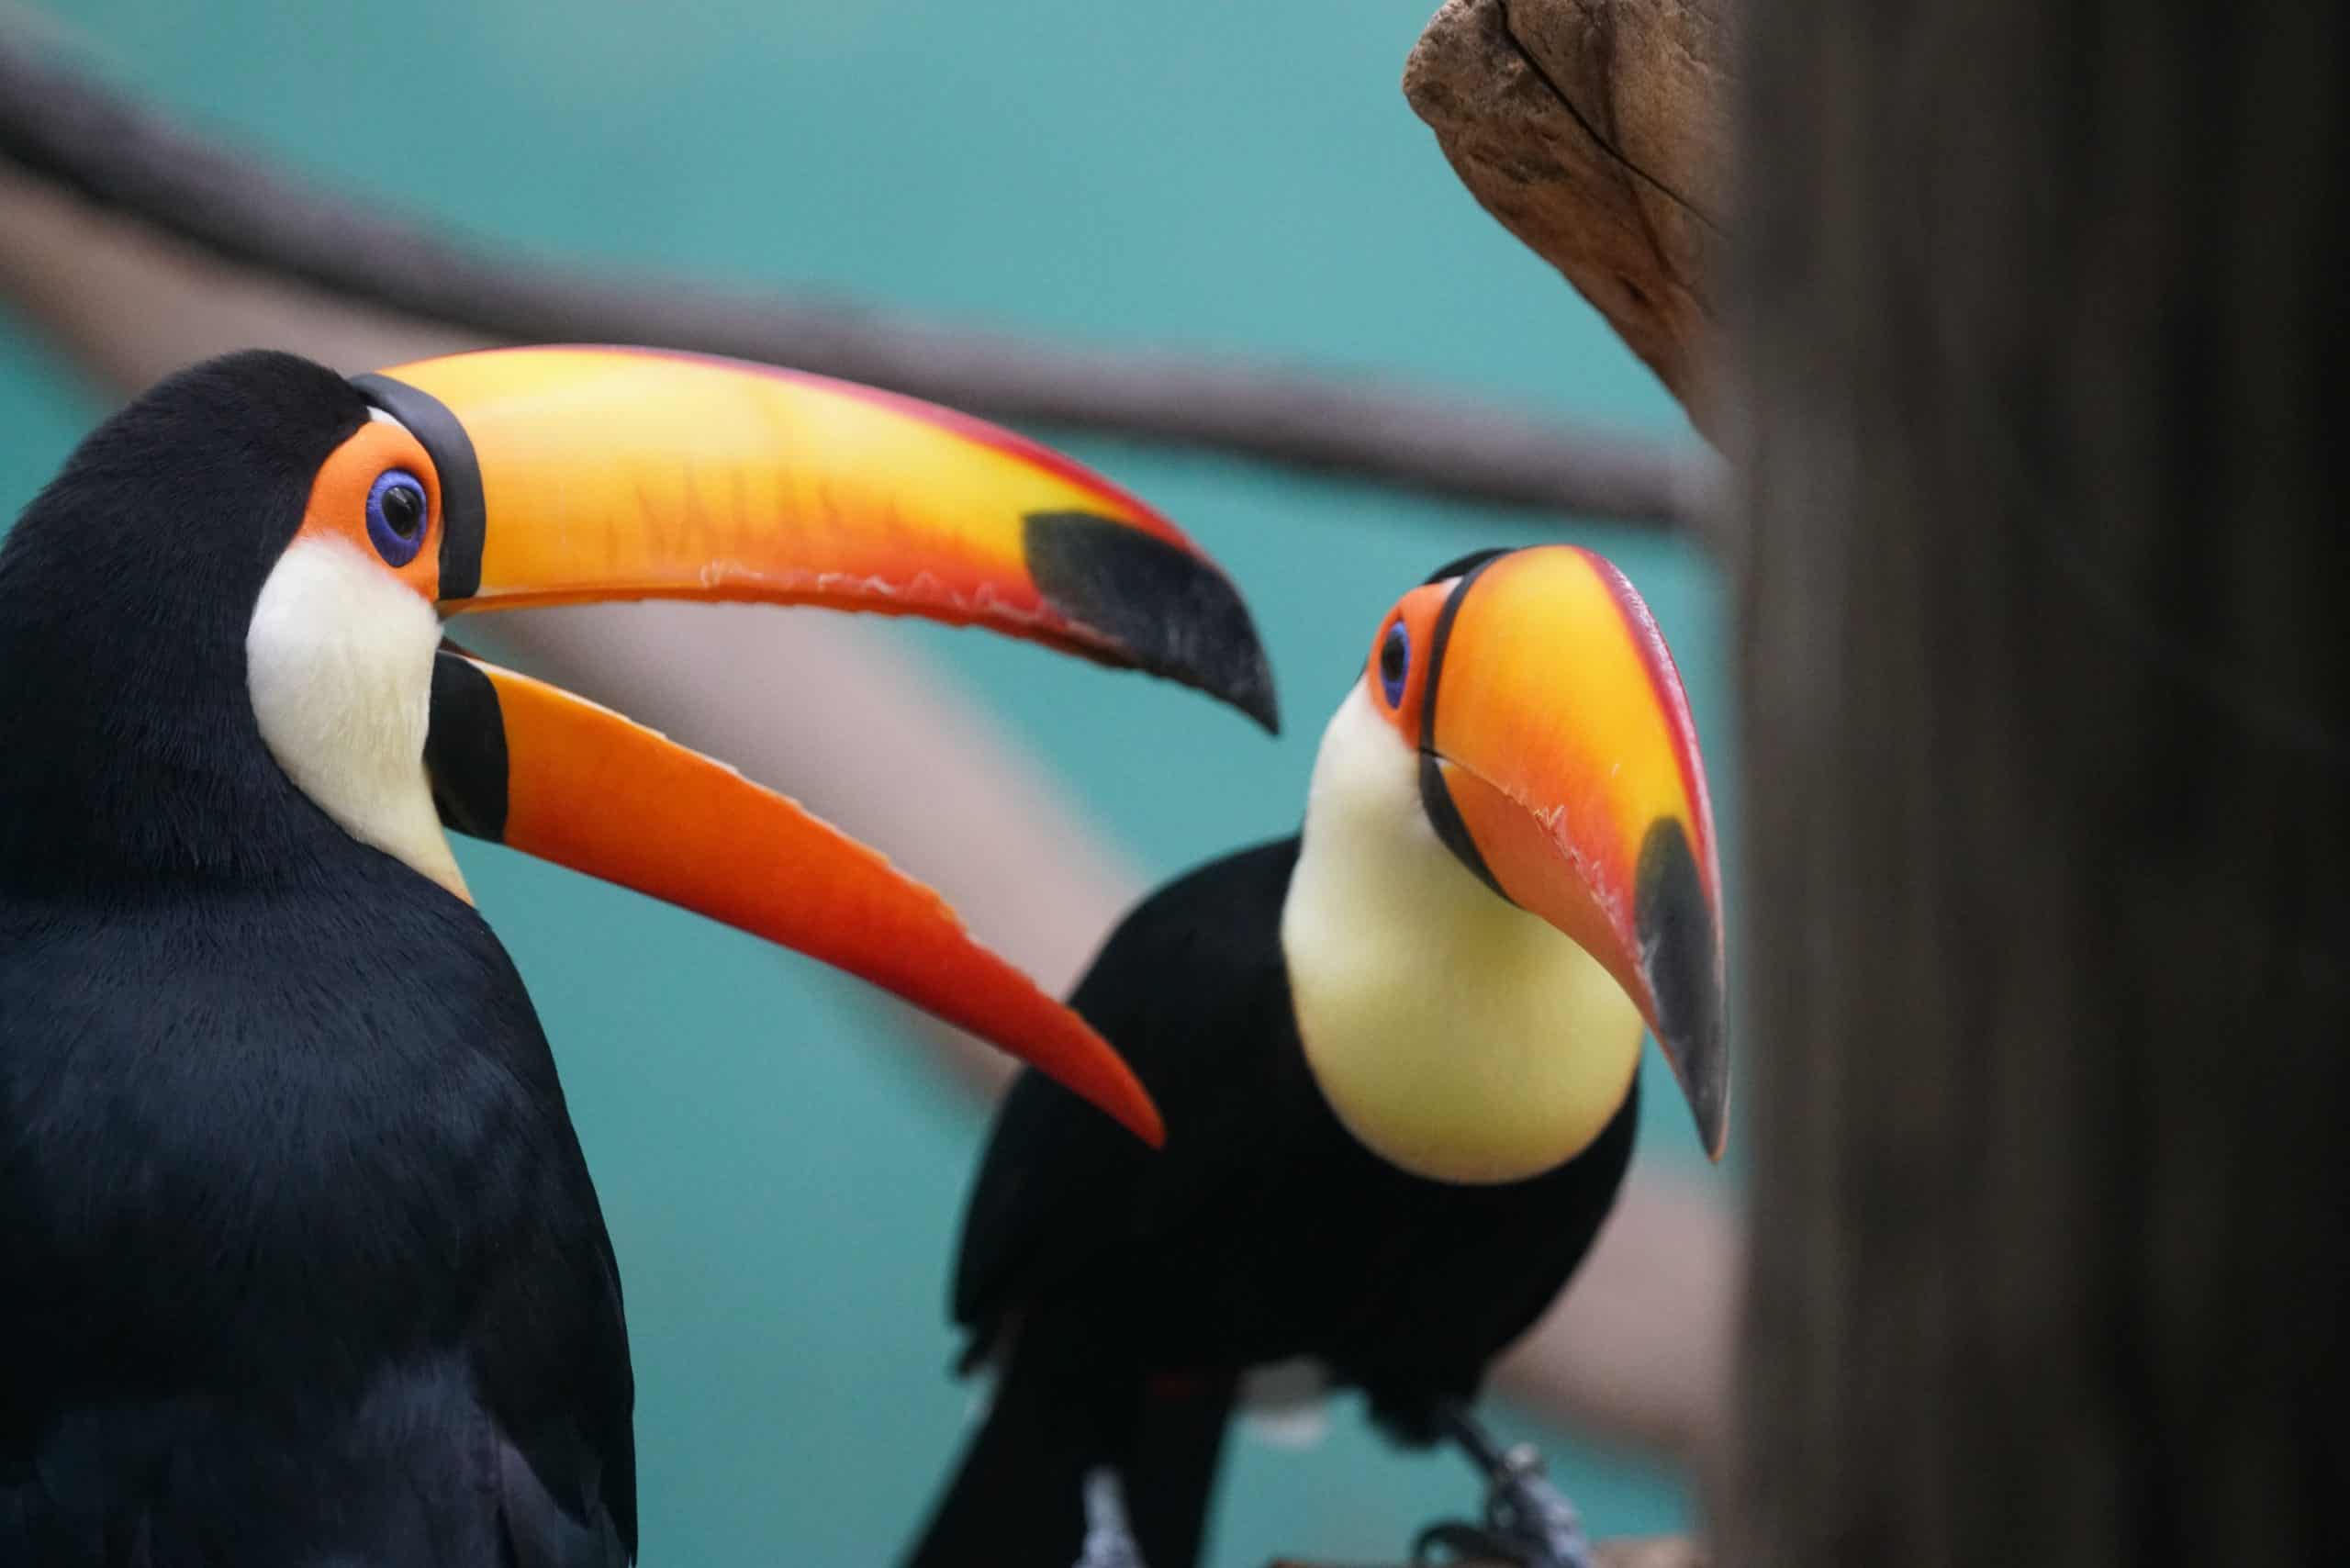 Can a toucan talk